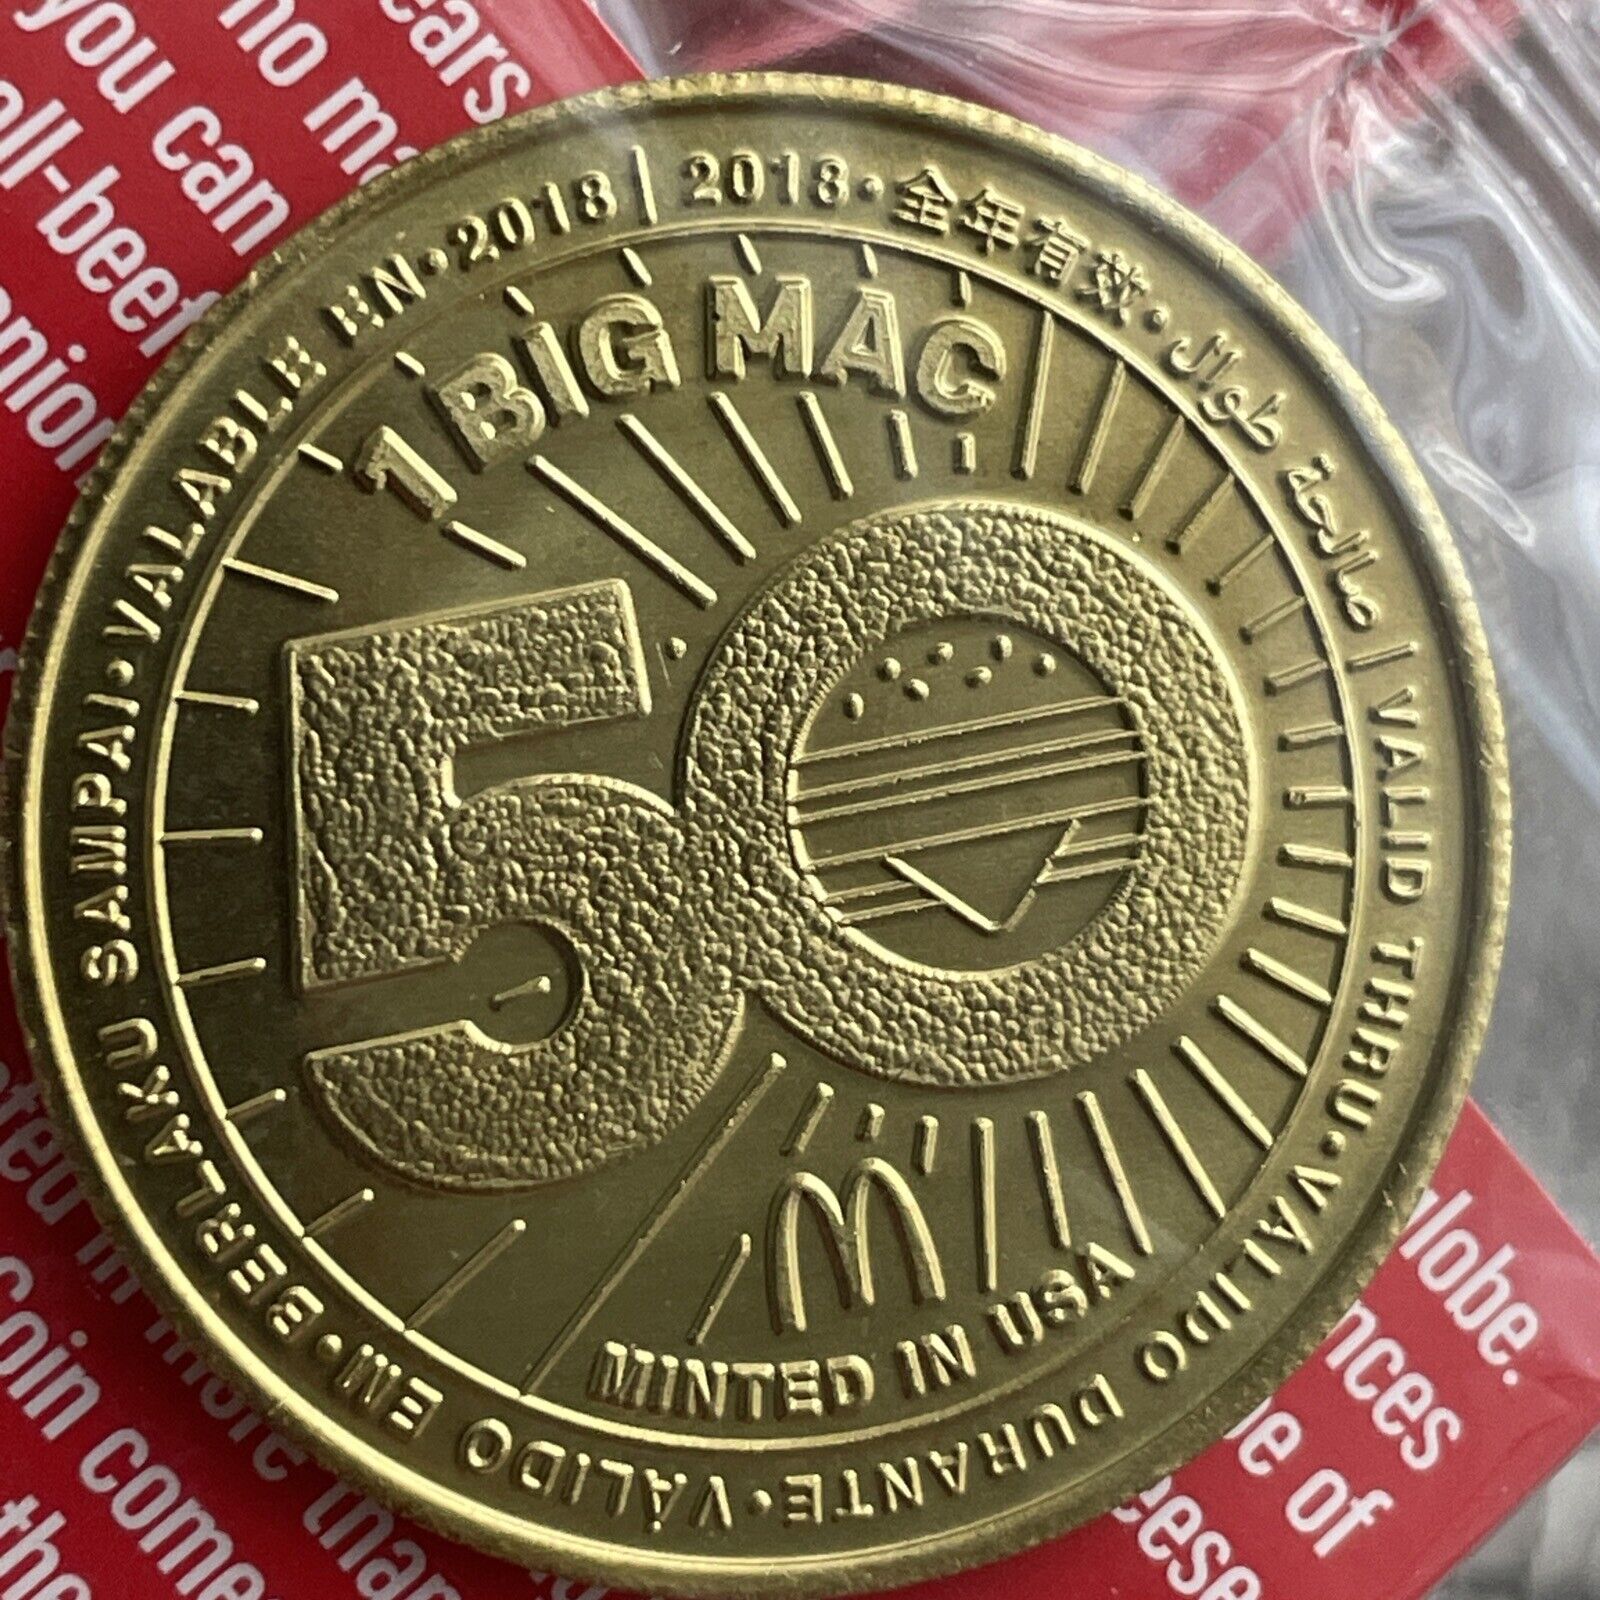 McDonald’s creates collectible coins honoring Big Mac’s 50th anniversary – Orange County Register